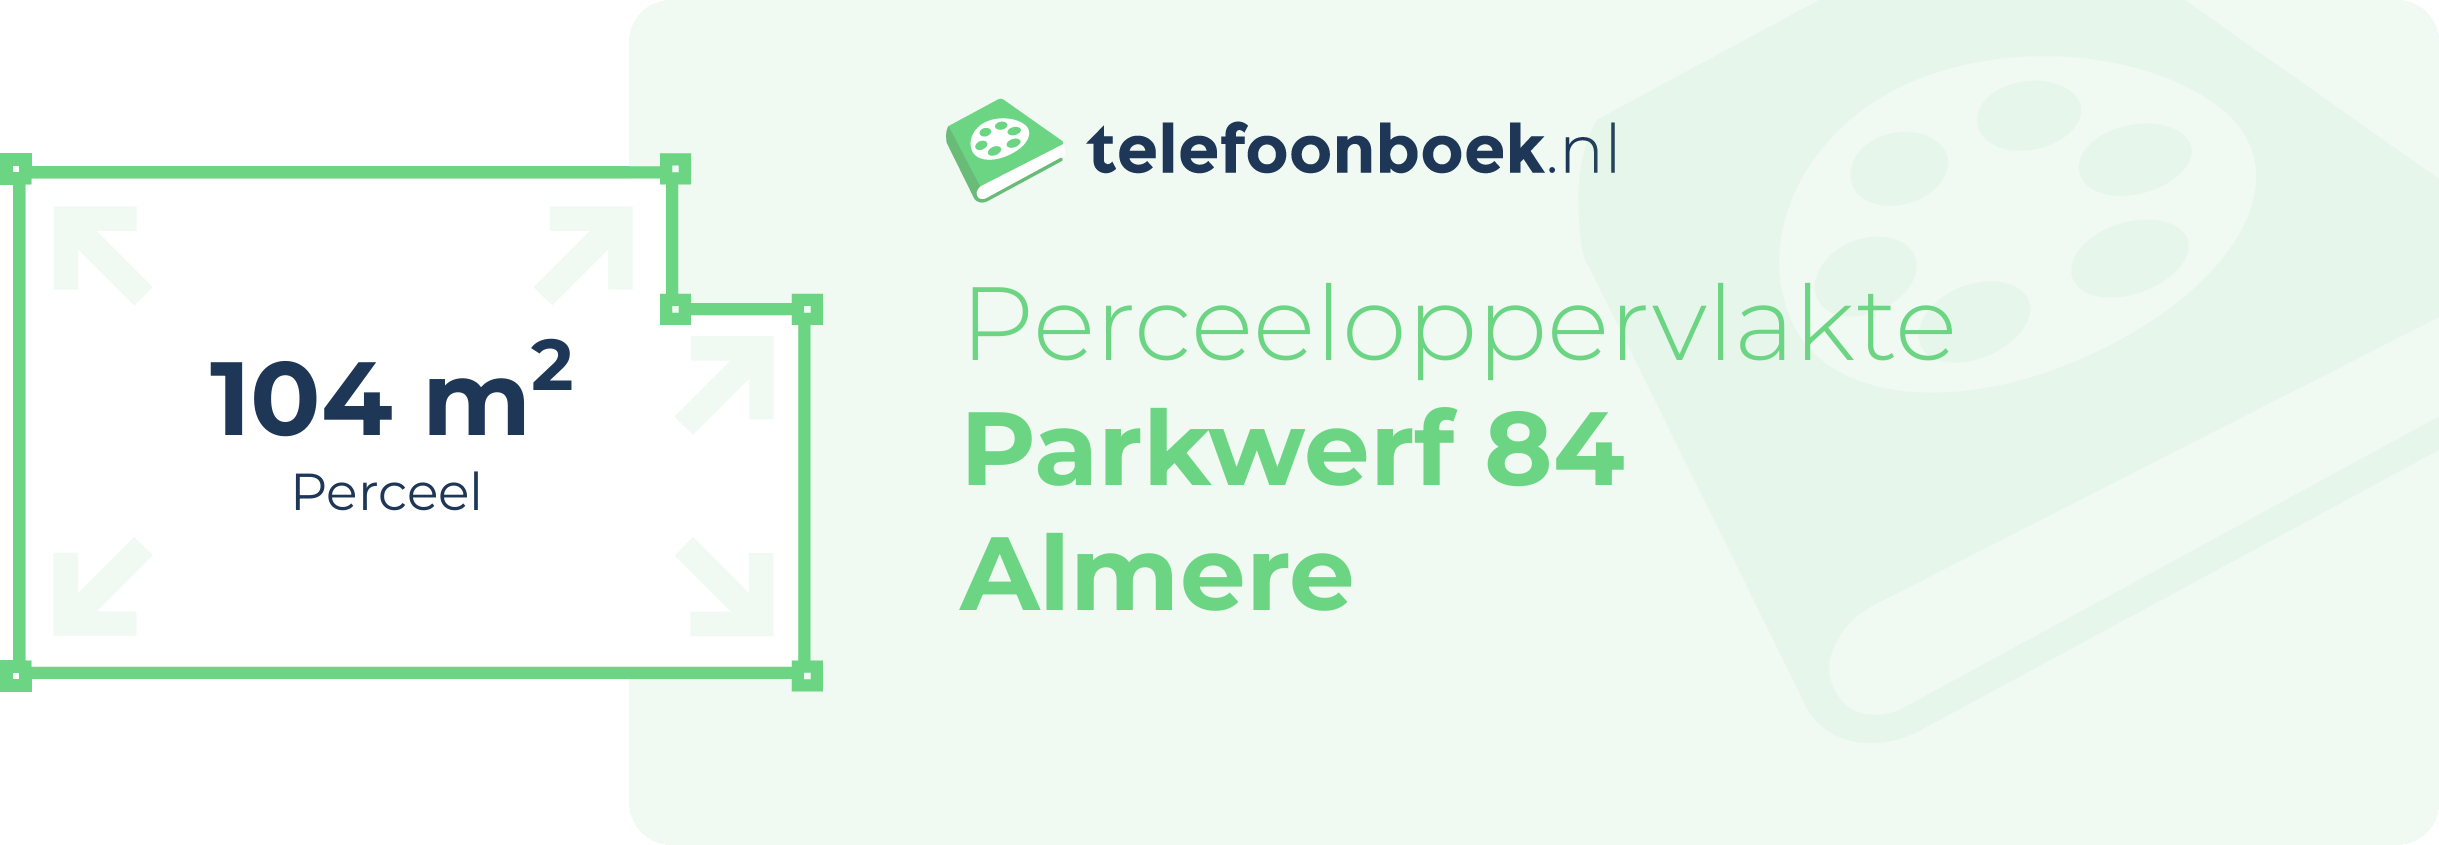 Perceeloppervlakte Parkwerf 84 Almere